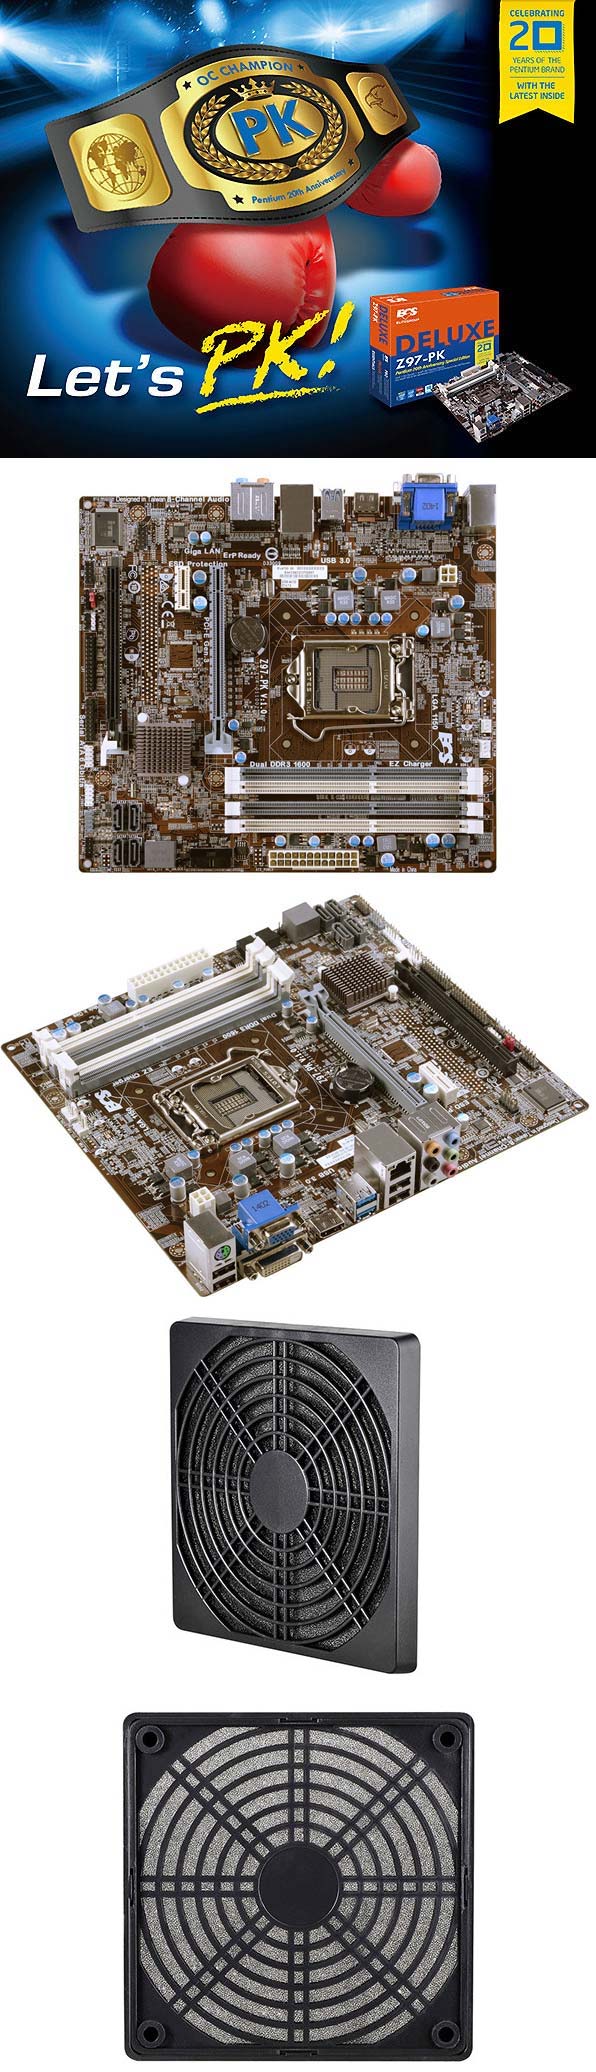 На фото показана плата ECS Z97-PK и фильтр Spire DustGuard